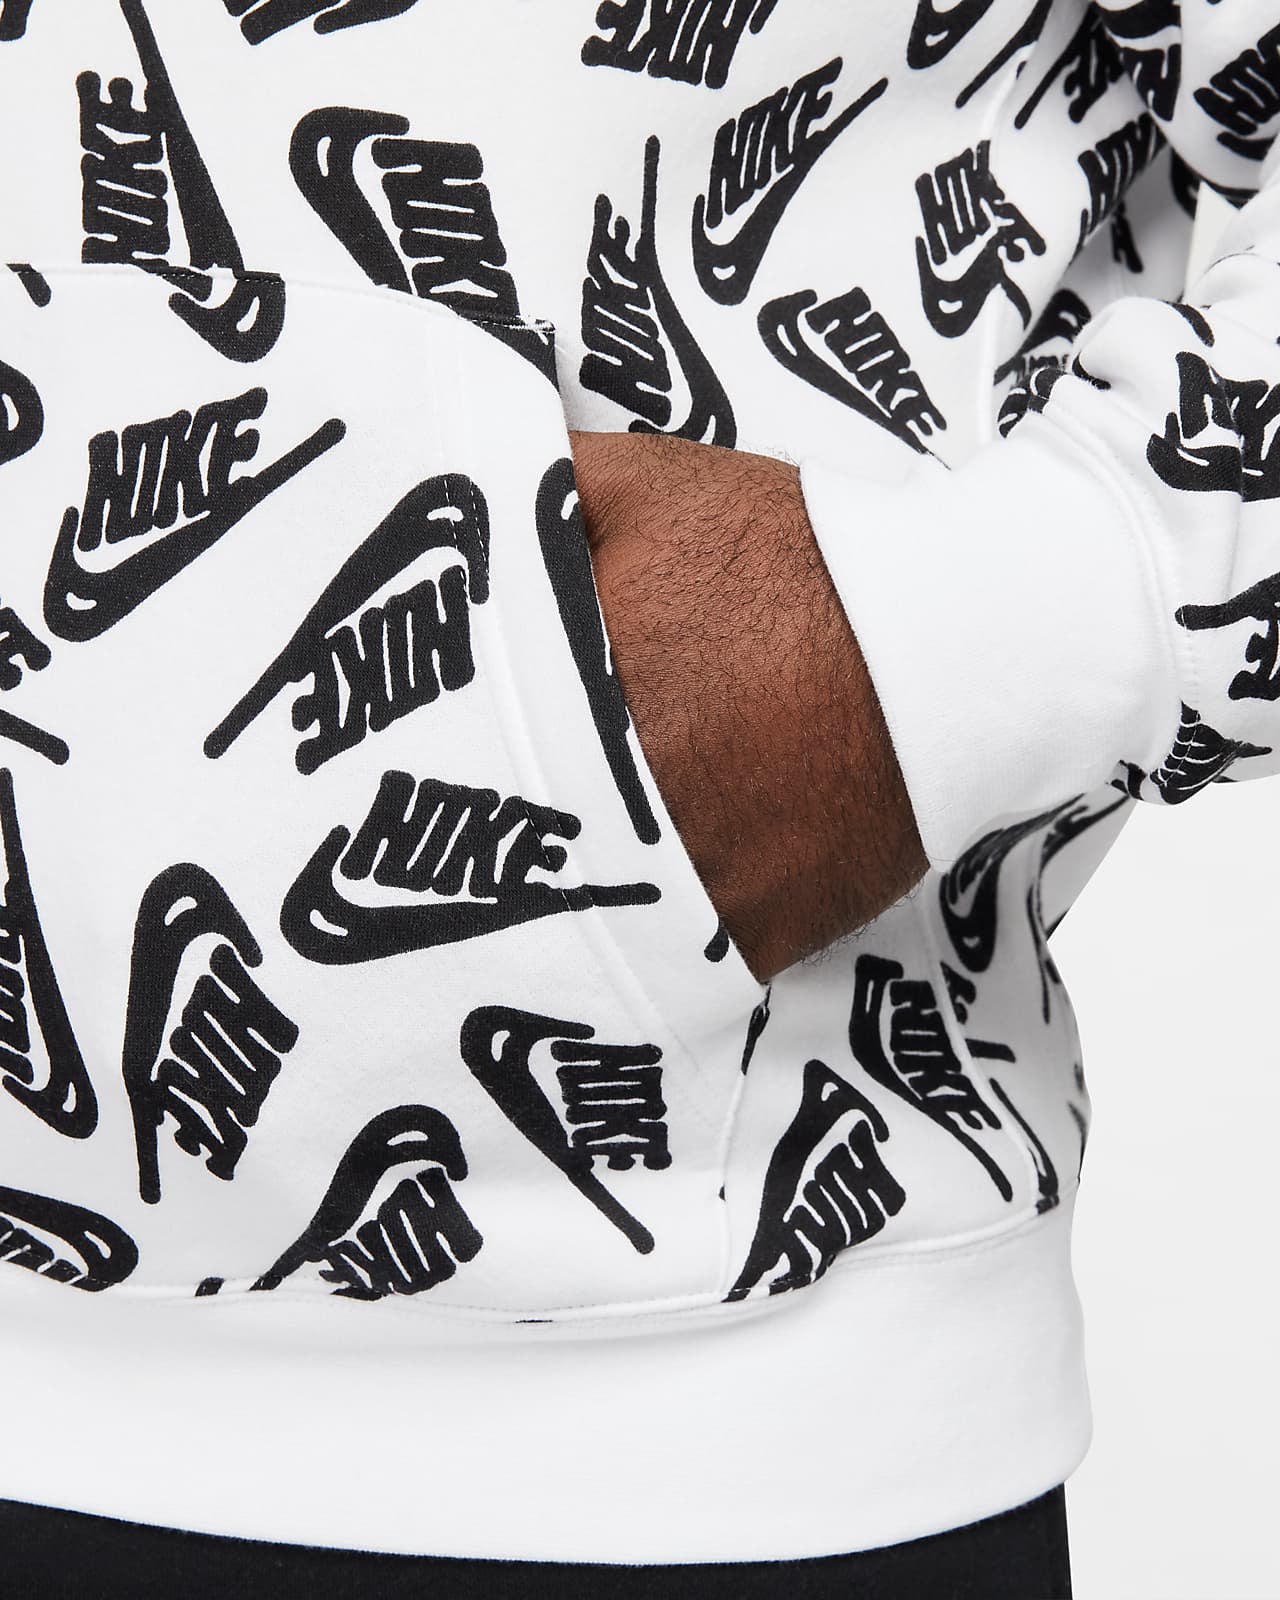 Nike Sportswear Sport Essentials+ Men's Pullover Hoodie